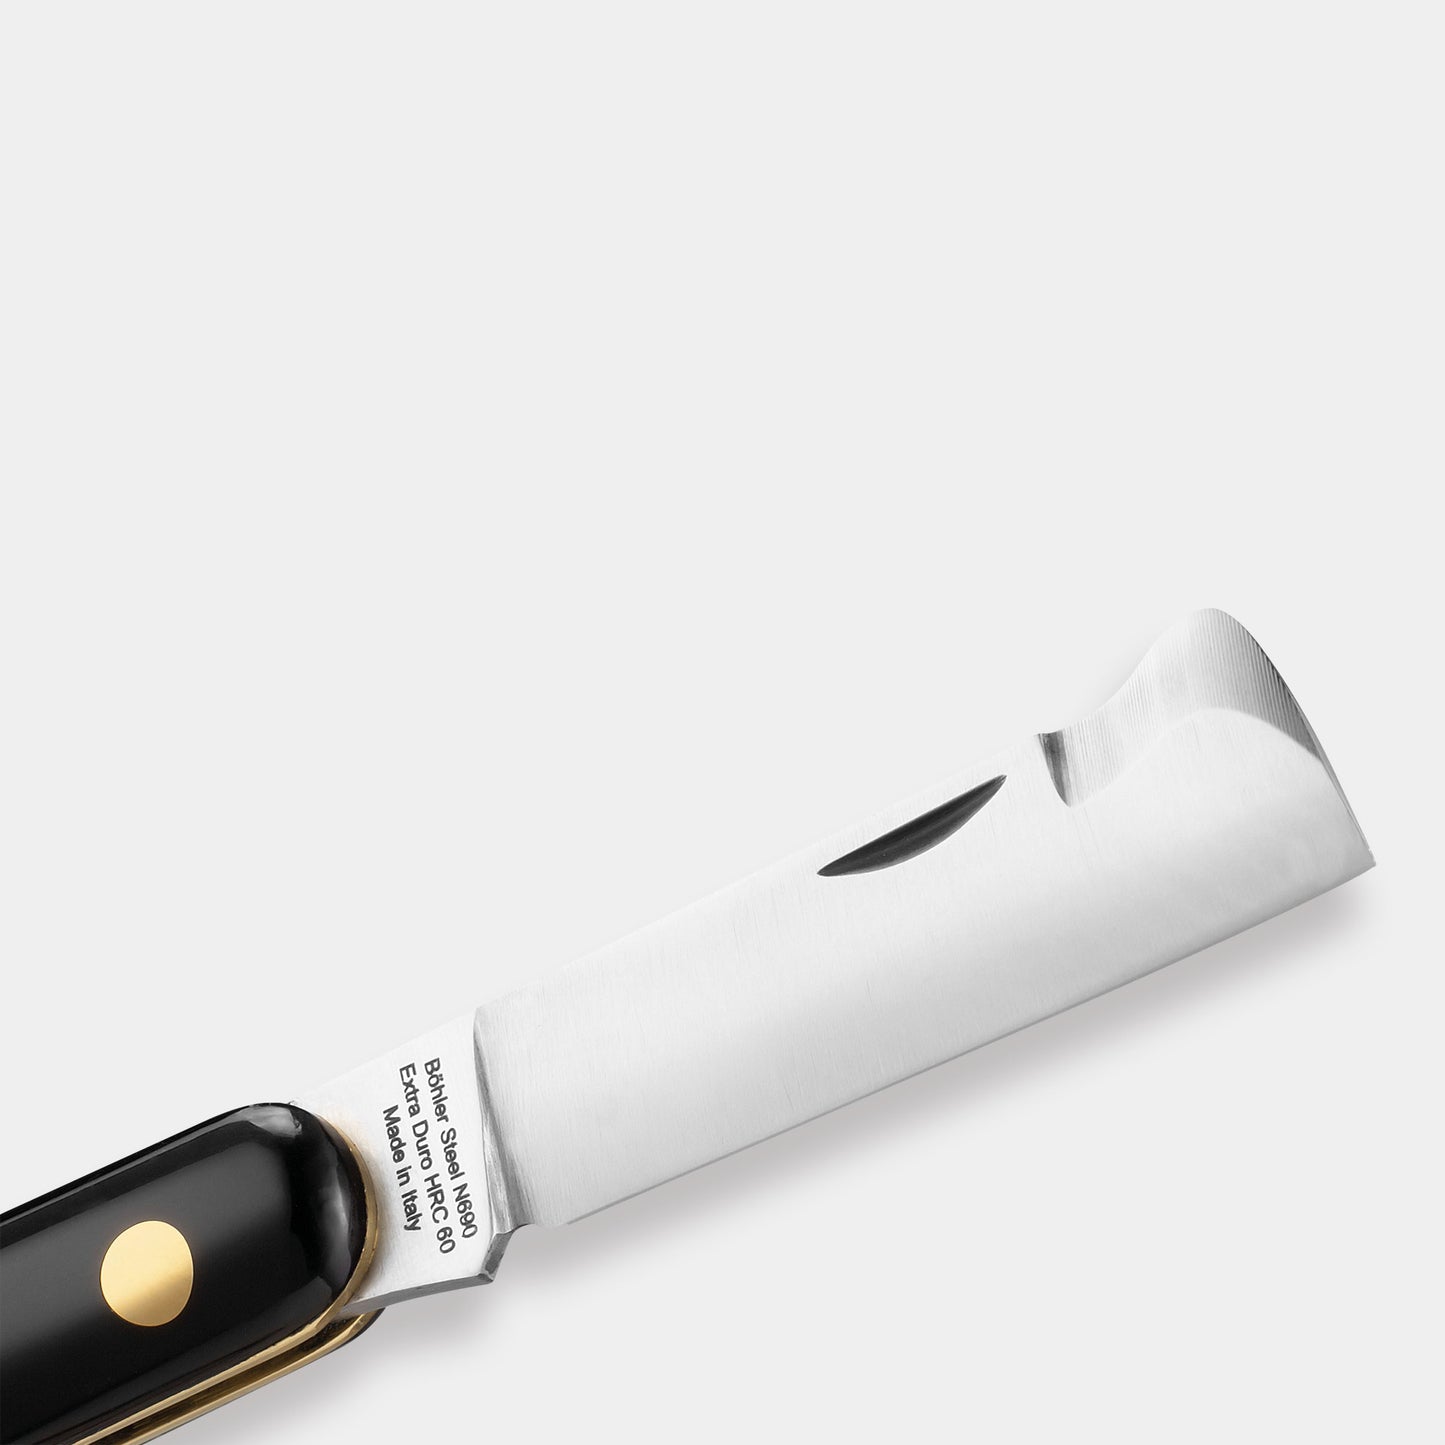 
                  
                    202AP LEFTY - Böhler N690 STAINLESS STEEL - Left Handed Grafting Tool with Stainless Steel Foldable Blade
                  
                